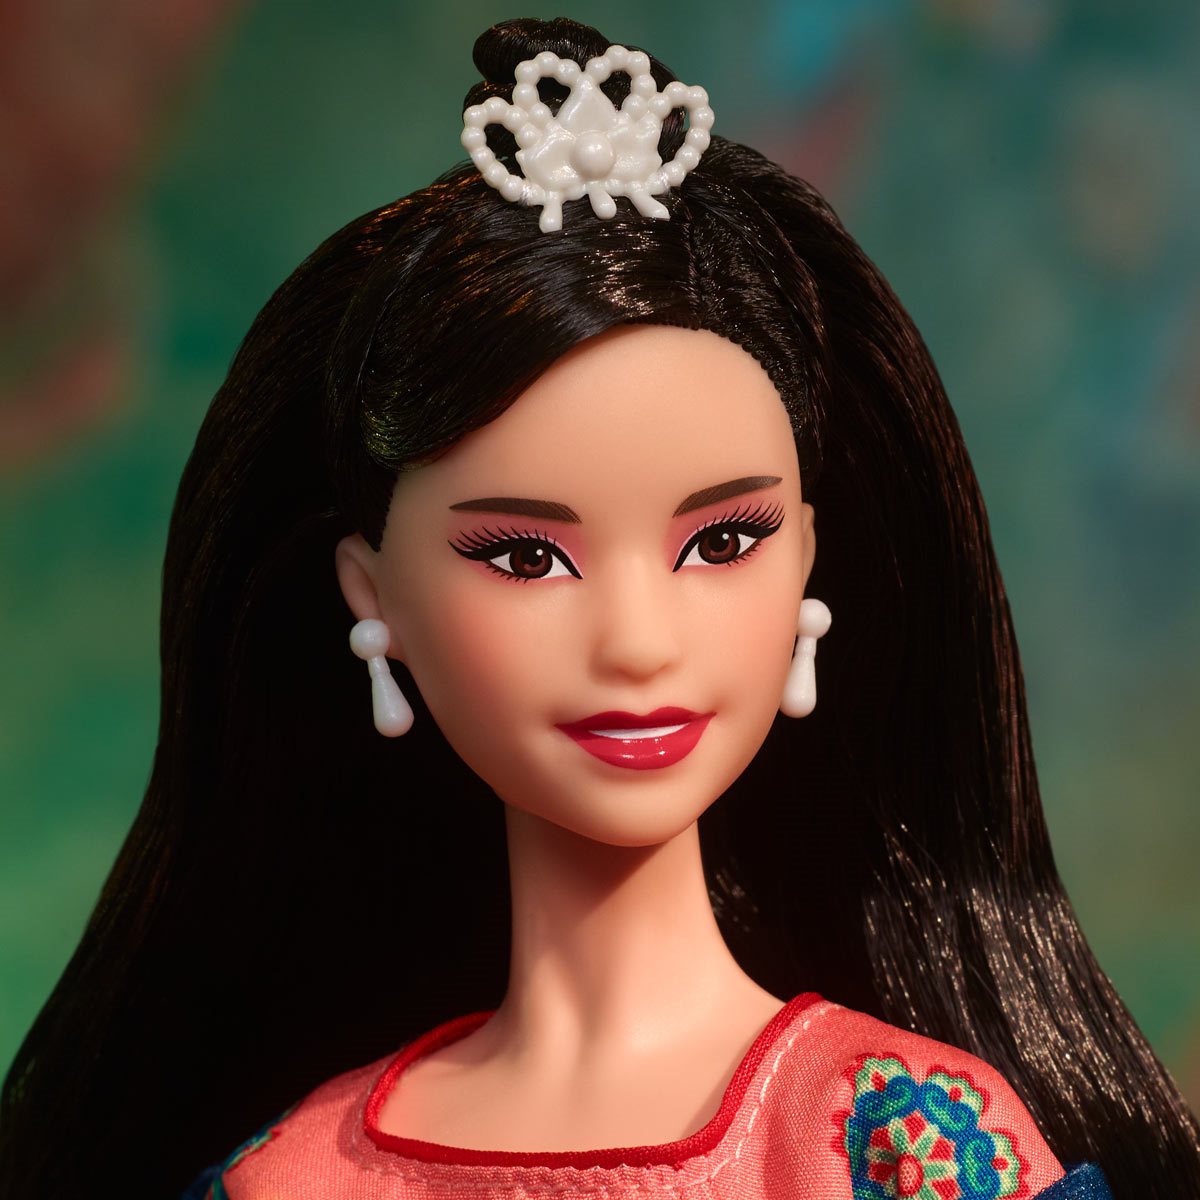 Knop Pidgin Viool Barbie Lunar New Year Doll - Entertainment Earth